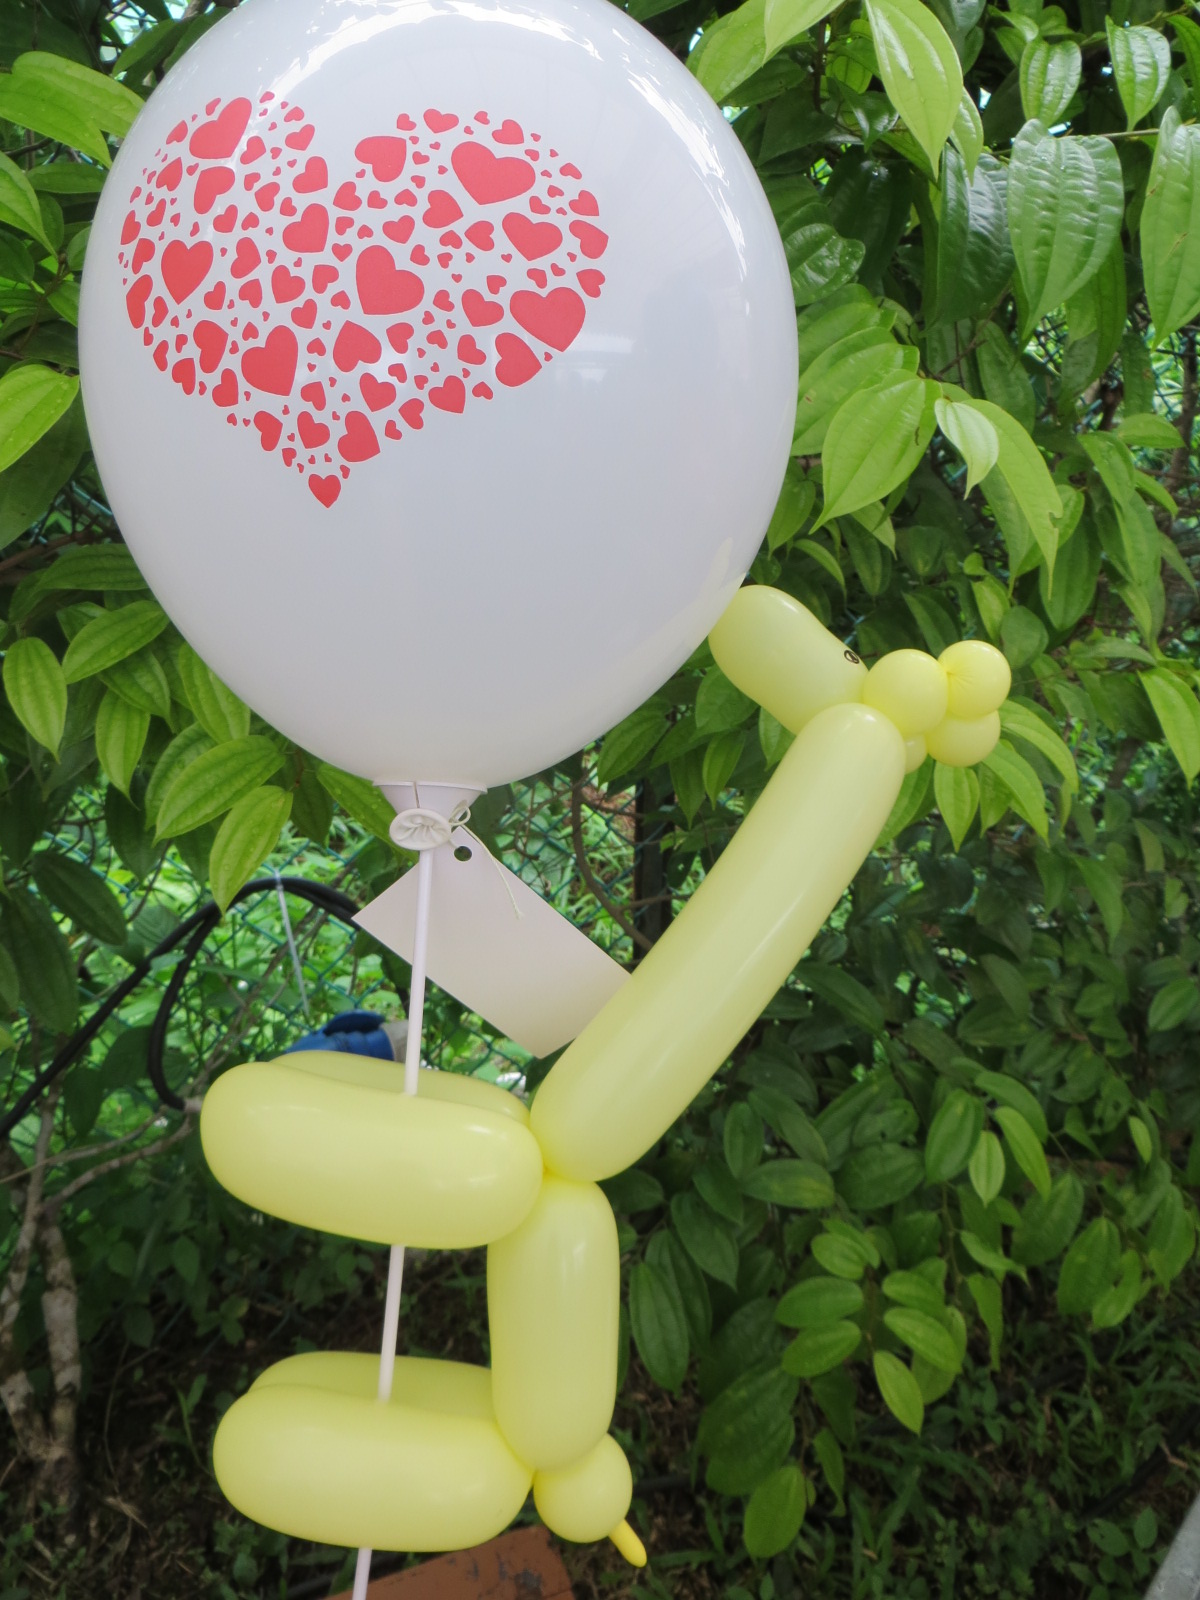 A balloon giraffe and a round heart ballloon